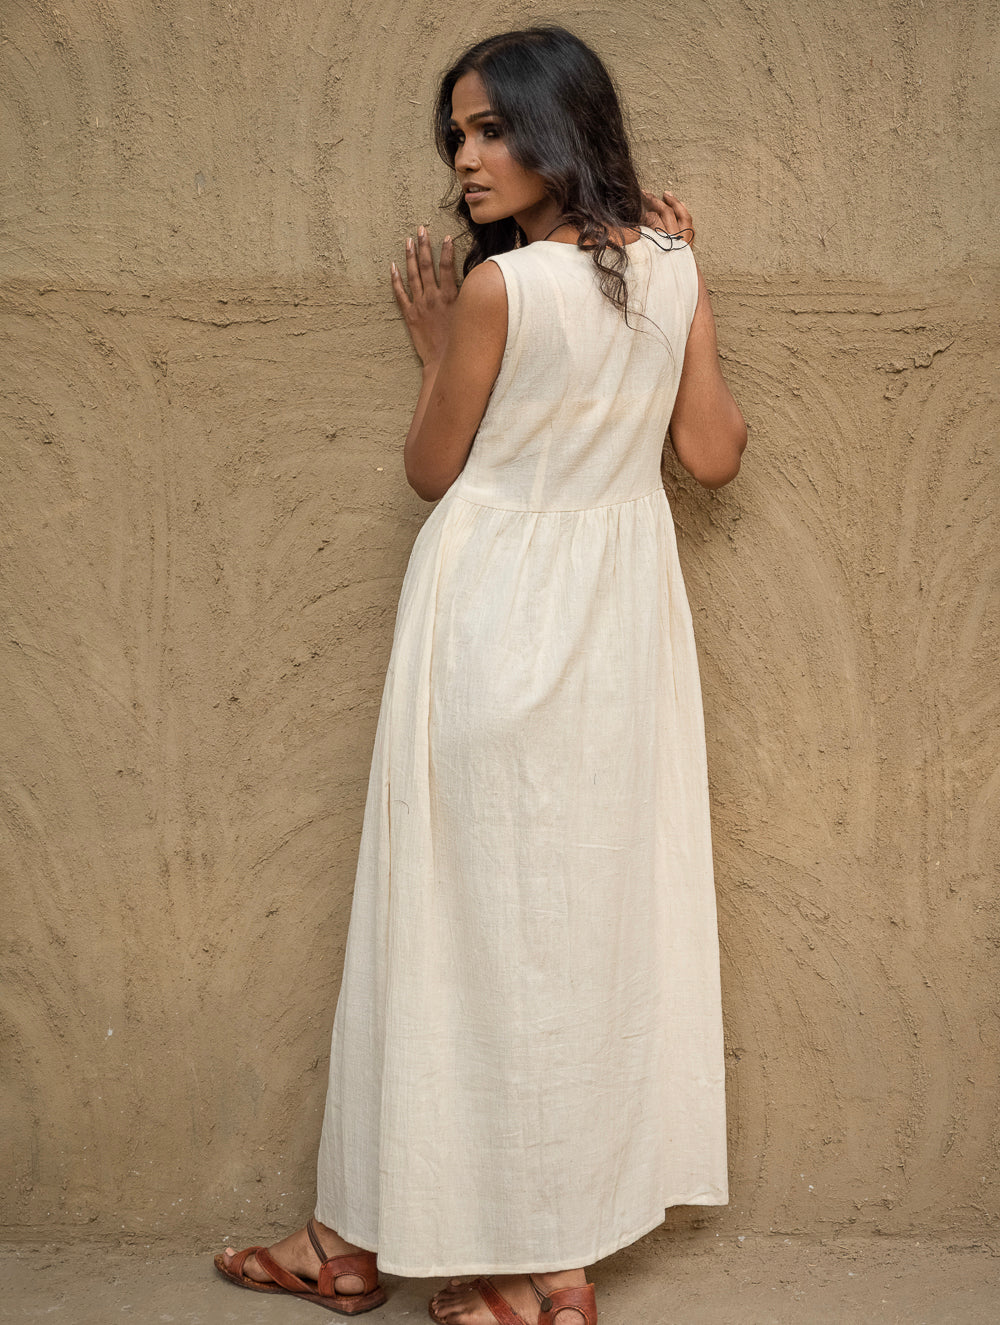 Load image into Gallery viewer, Handwoven Elegance. Organic Kala Cotton Long Dress - Pure Cream 